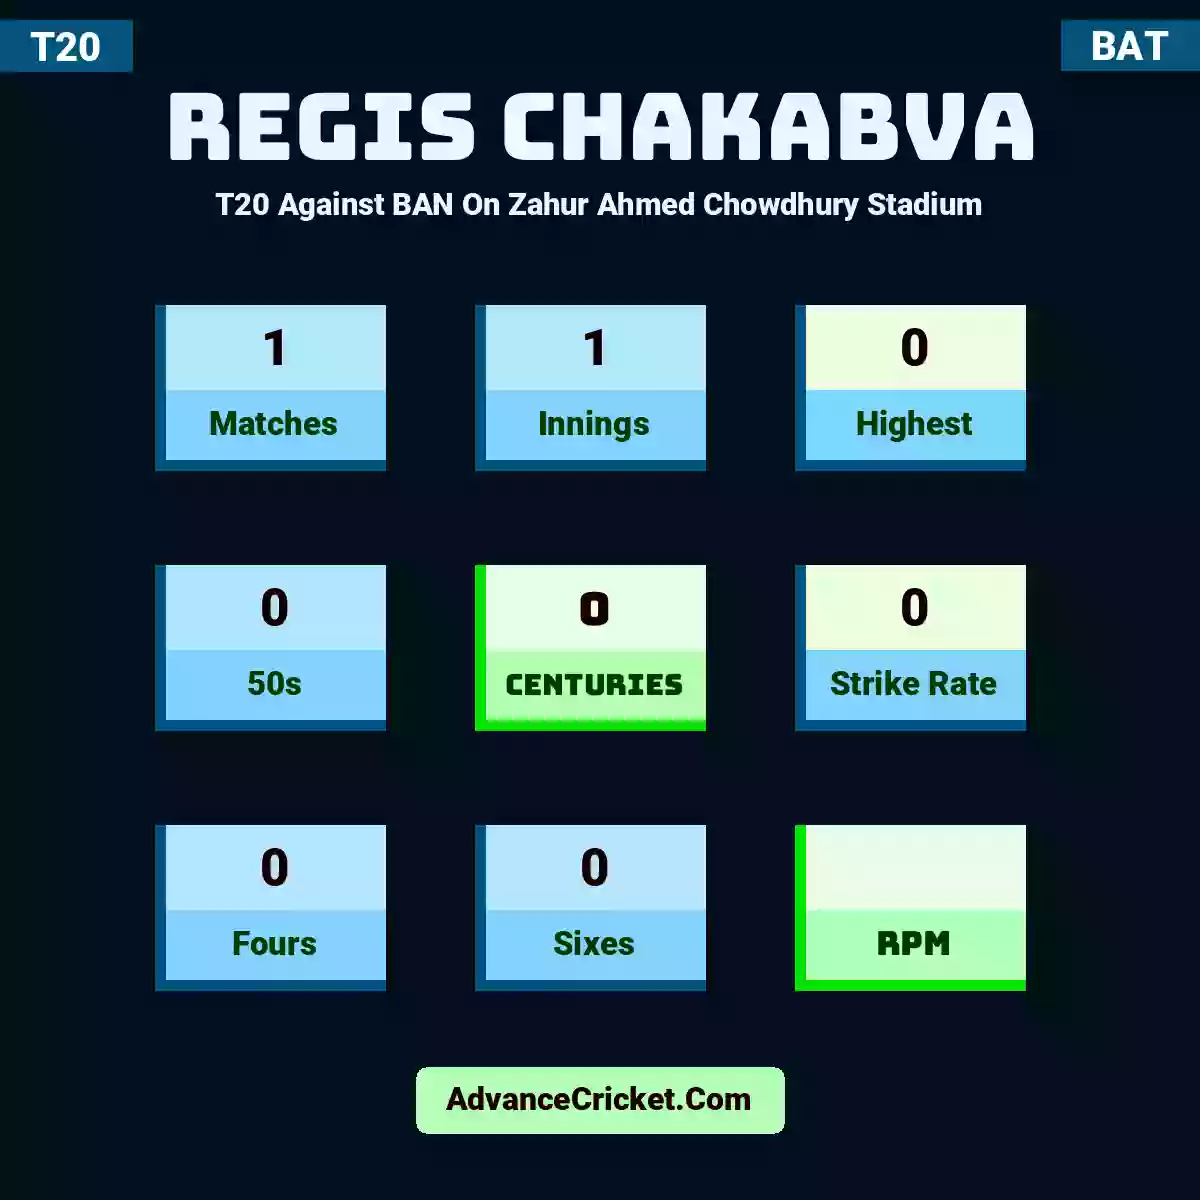 Regis Chakabva T20  Against BAN On Zahur Ahmed Chowdhury Stadium, Regis Chakabva played 1 matches, scored 0 runs as highest, 0 half-centuries, and 0 centuries, with a strike rate of 0. R.Chakabva hit 0 fours and 0 sixes.